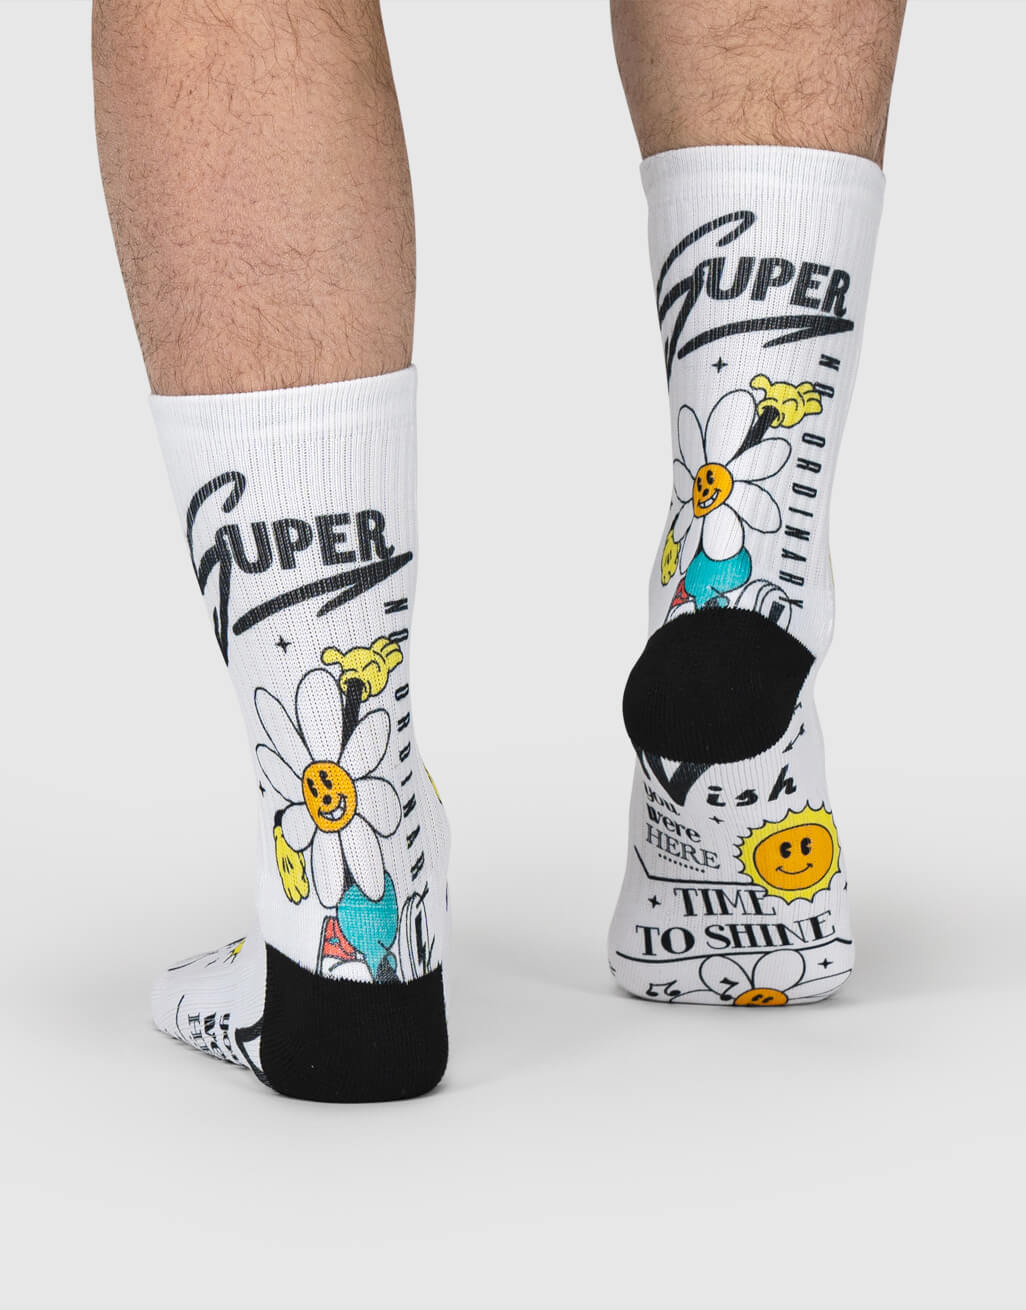 Super Magazine Socks